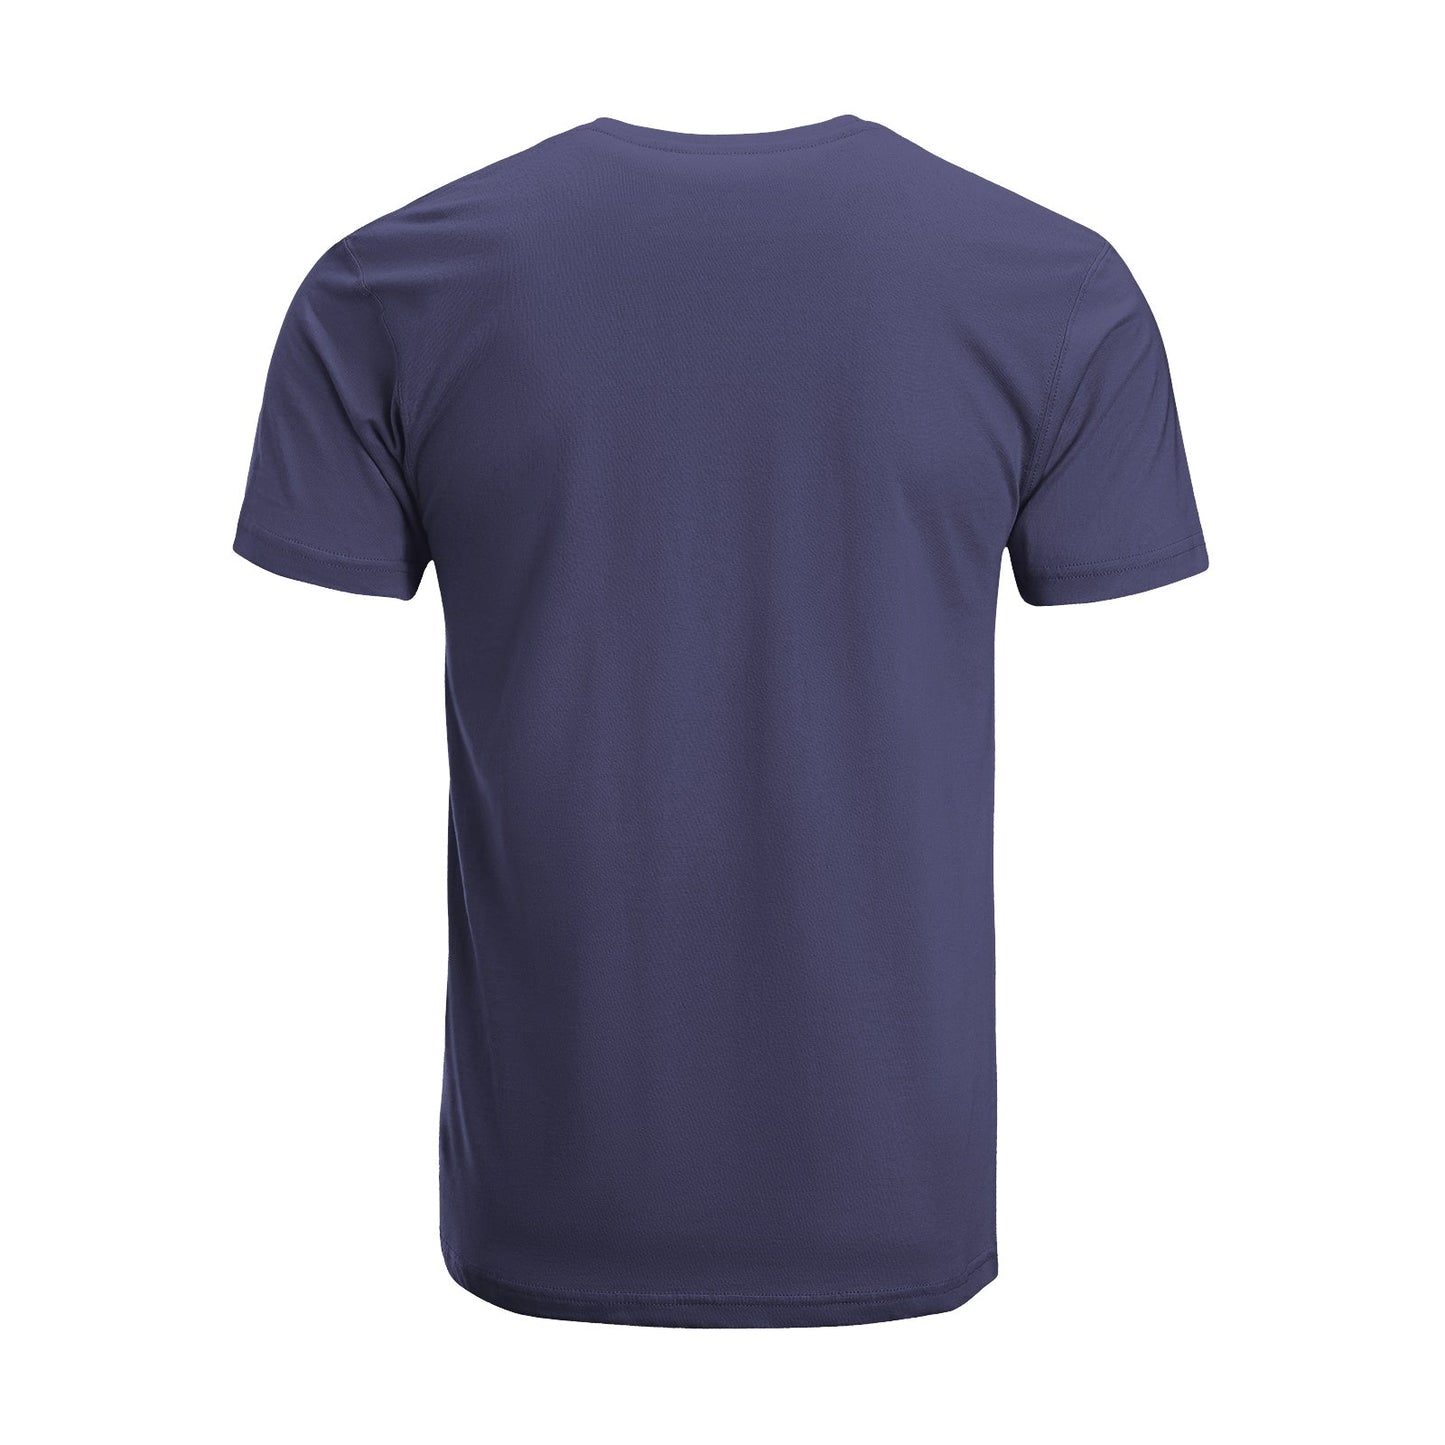 Unisex Short Sleeve Crew Neck Cotton Jersey T-Shirt MOM 33